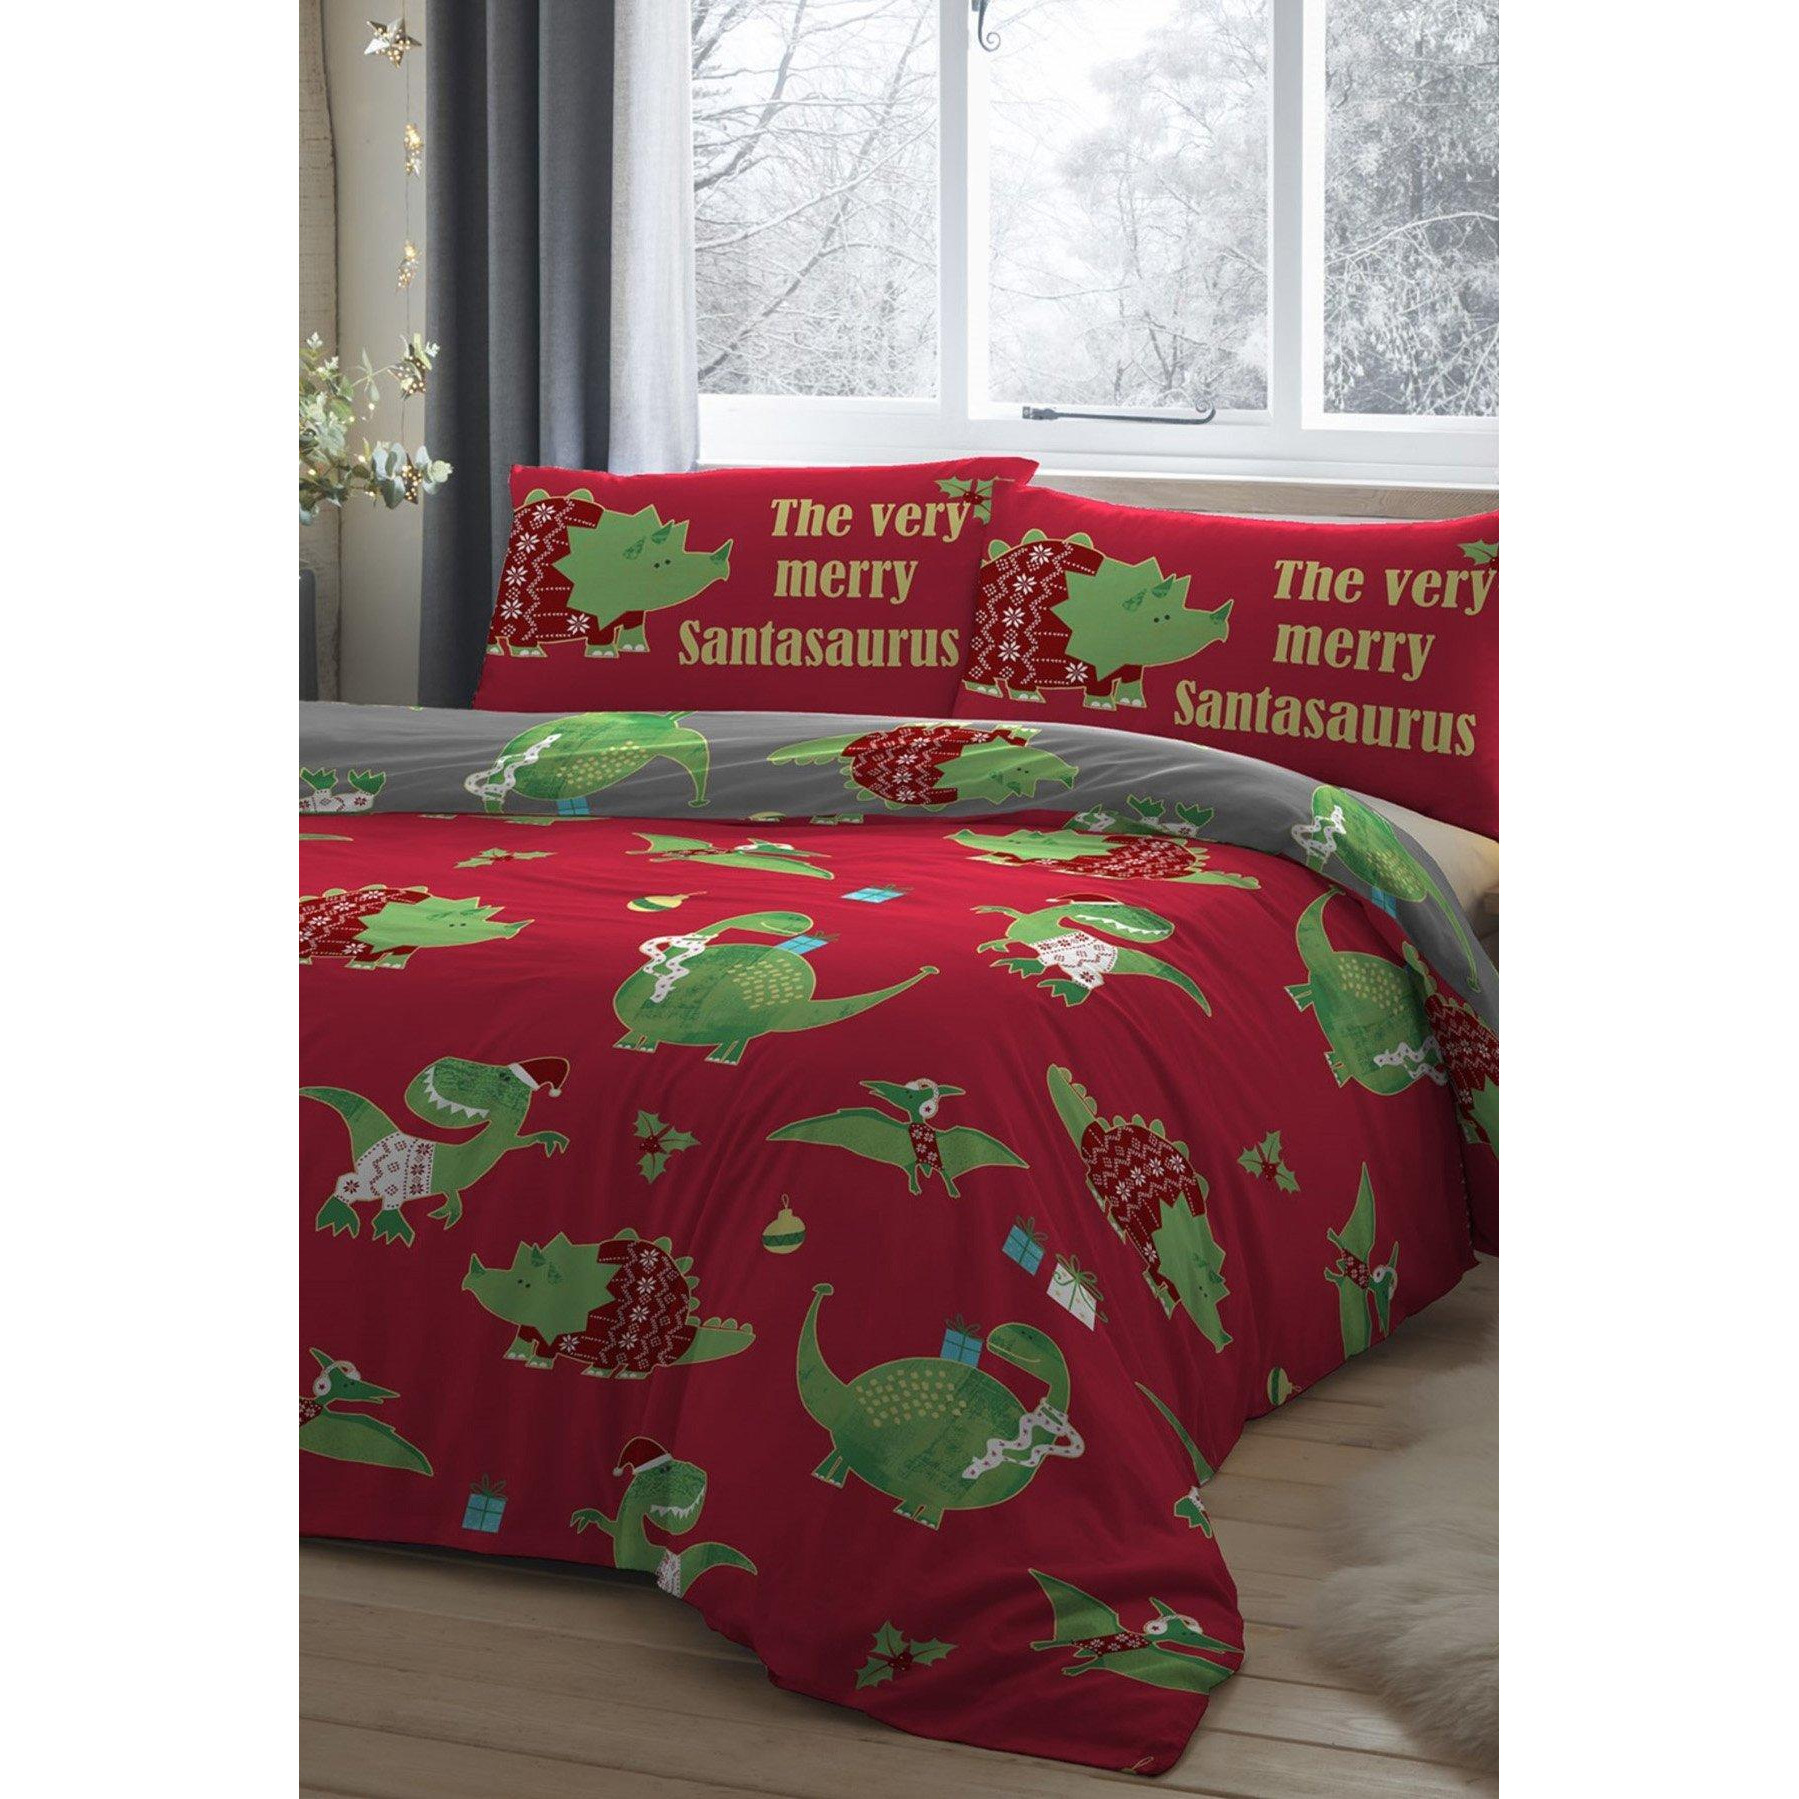 'Santasaurus' Christmas Glow in the Dark Bedroom Duvet Cover Set - image 1